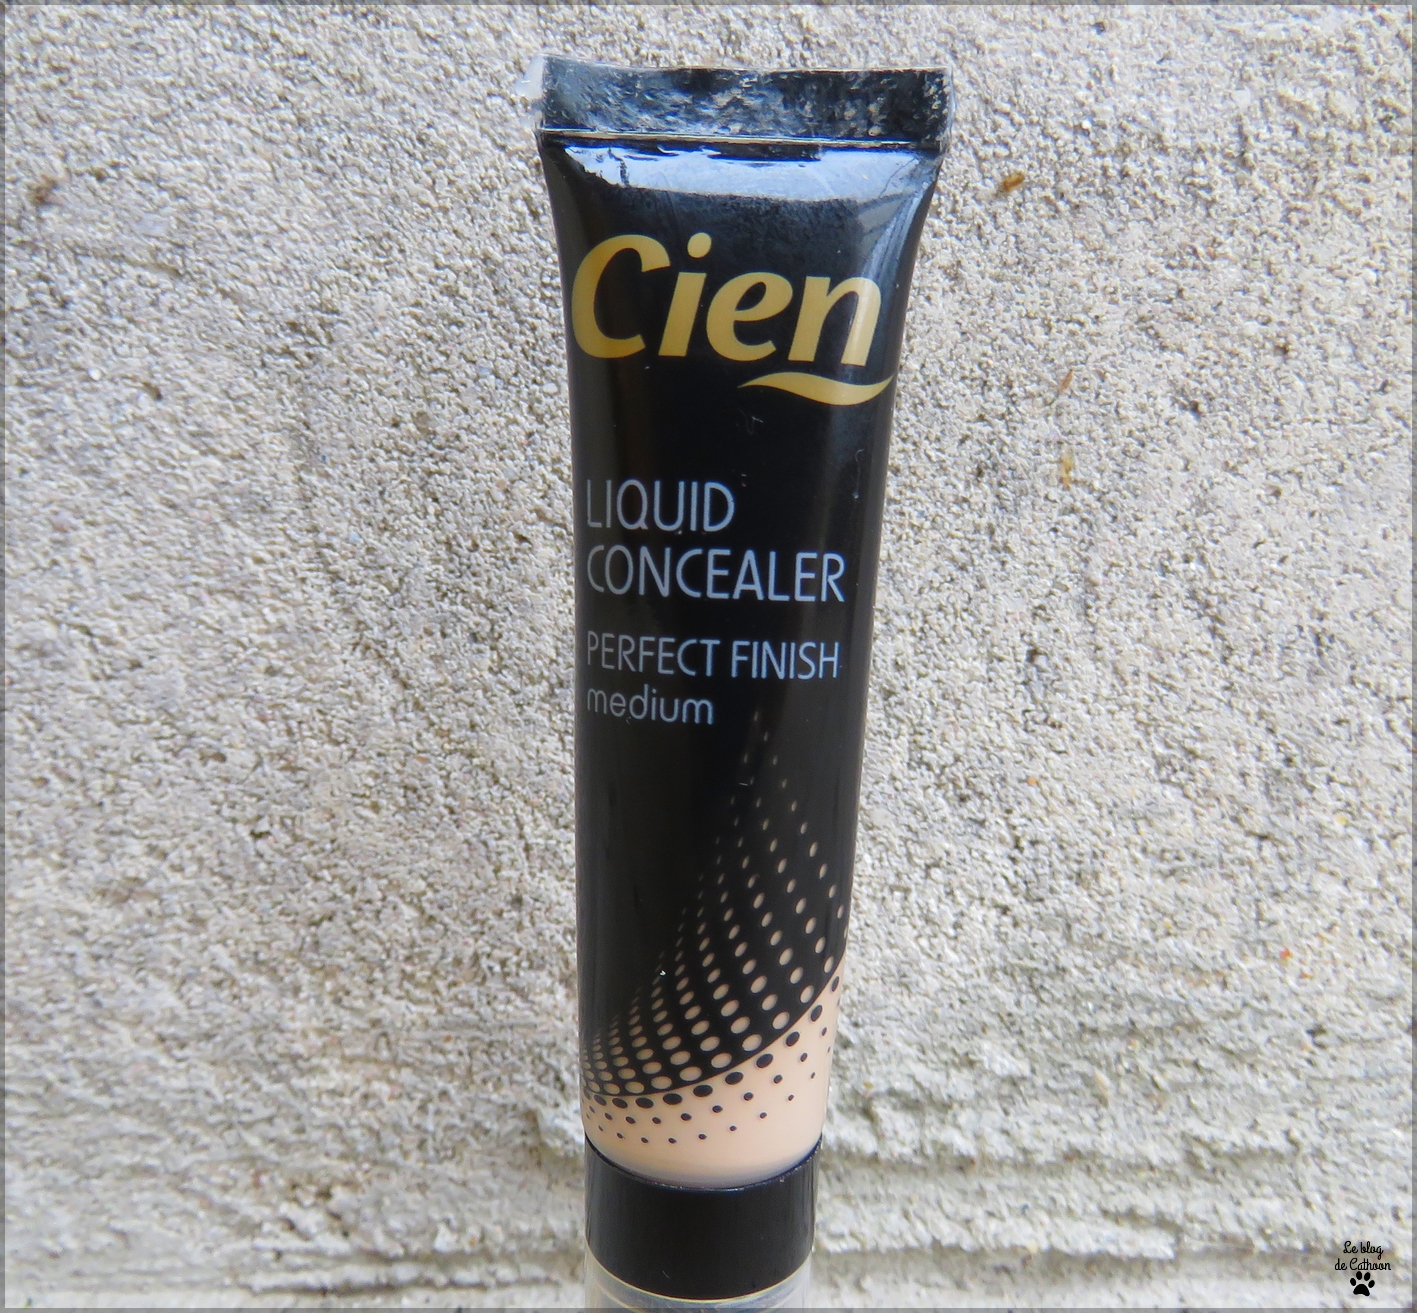 Liquid Concealer - Cien - Lidl